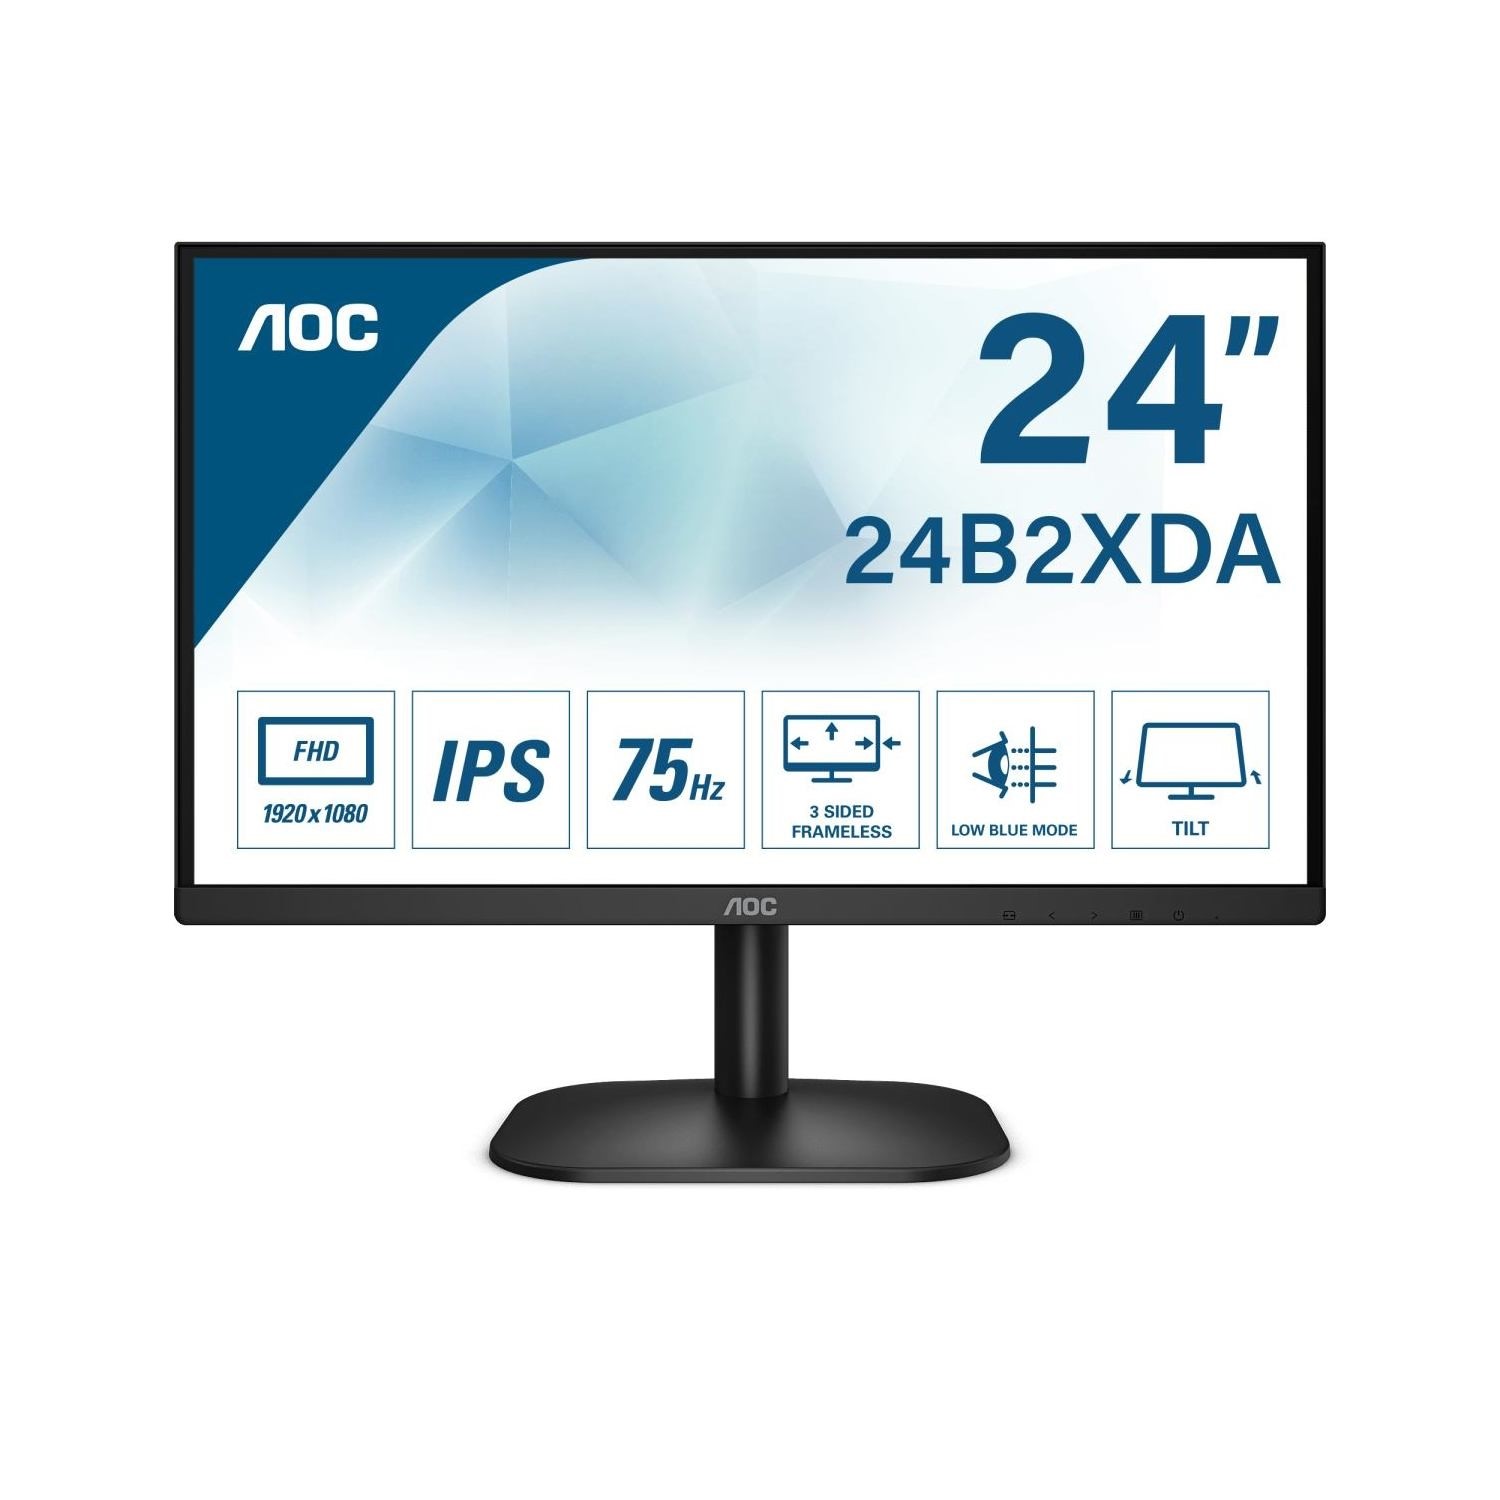 AOC 24B2XDAM 24" Full HD Monitor